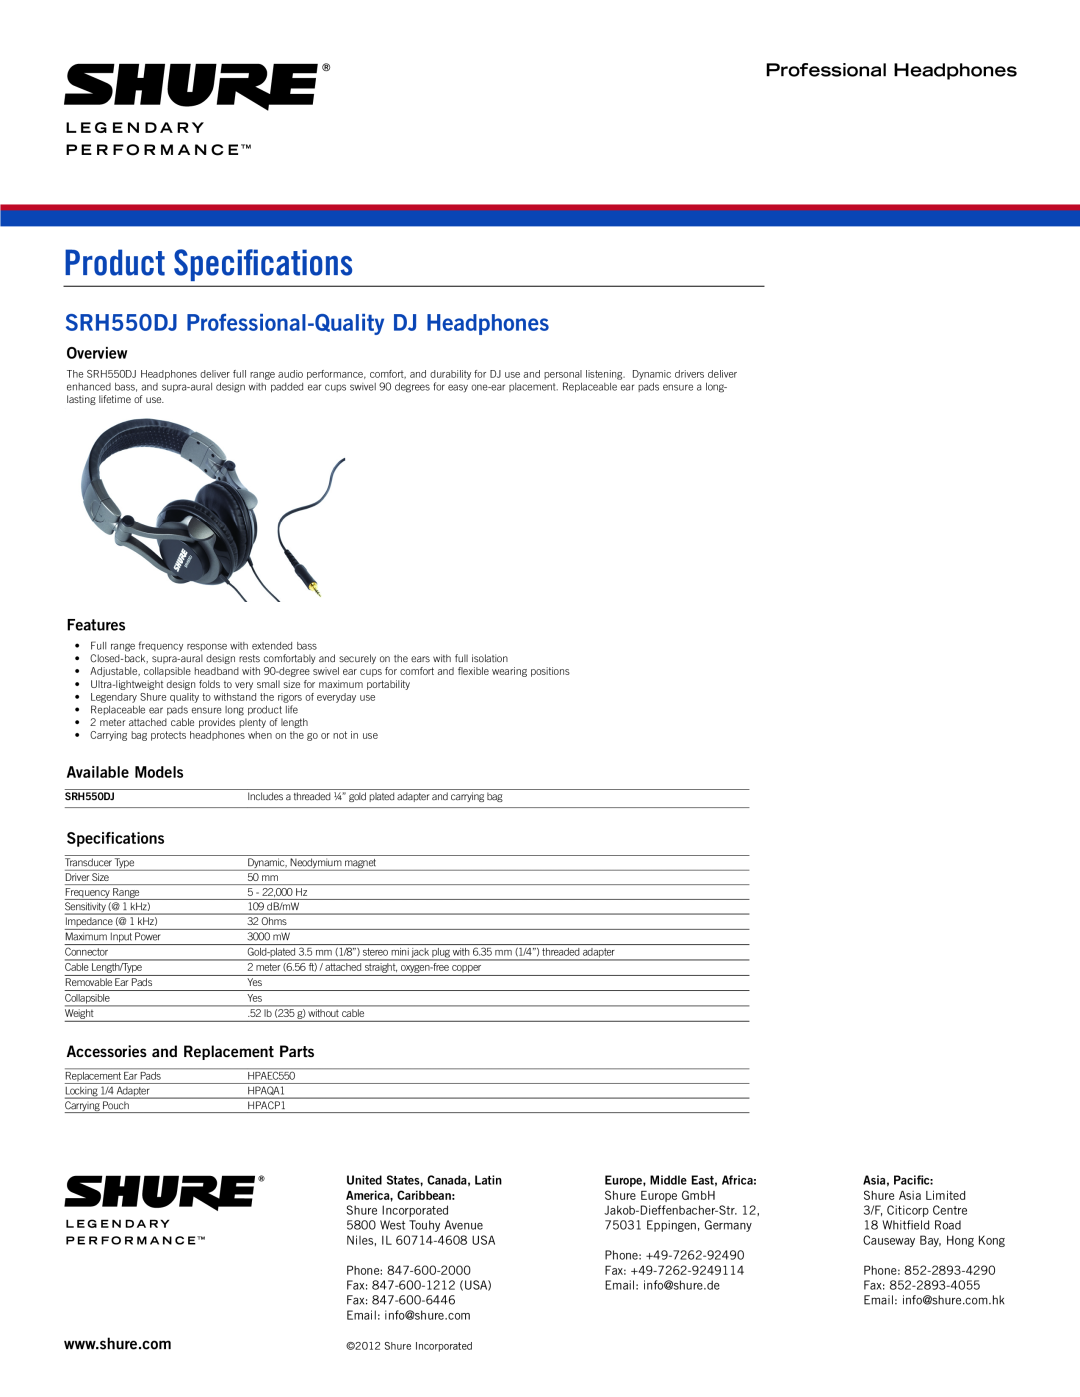 Shure specifications Product Specifications, SRH550DJ Professional-QualityDJ Headphones, Professional Headphones 